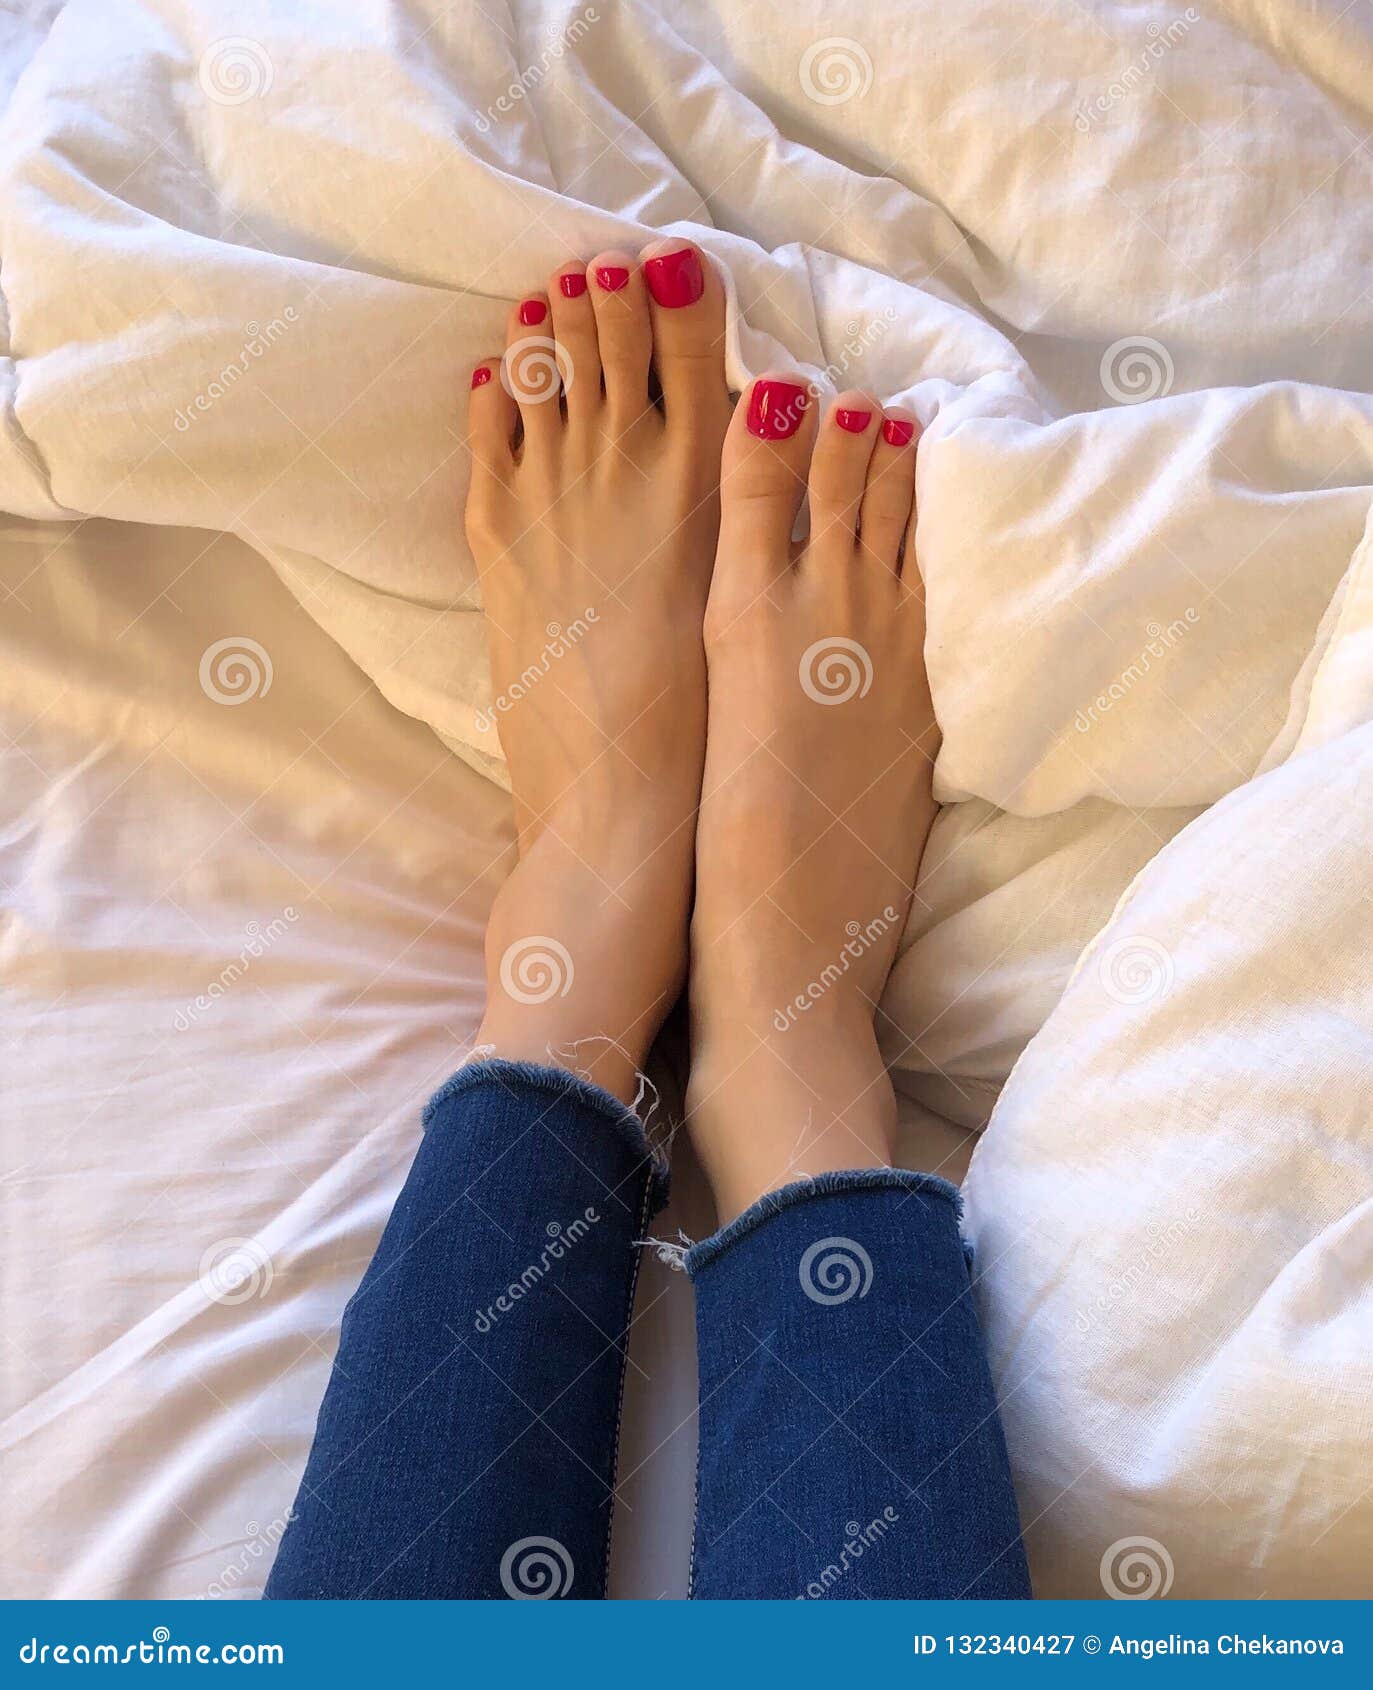 Beautiful feet pics